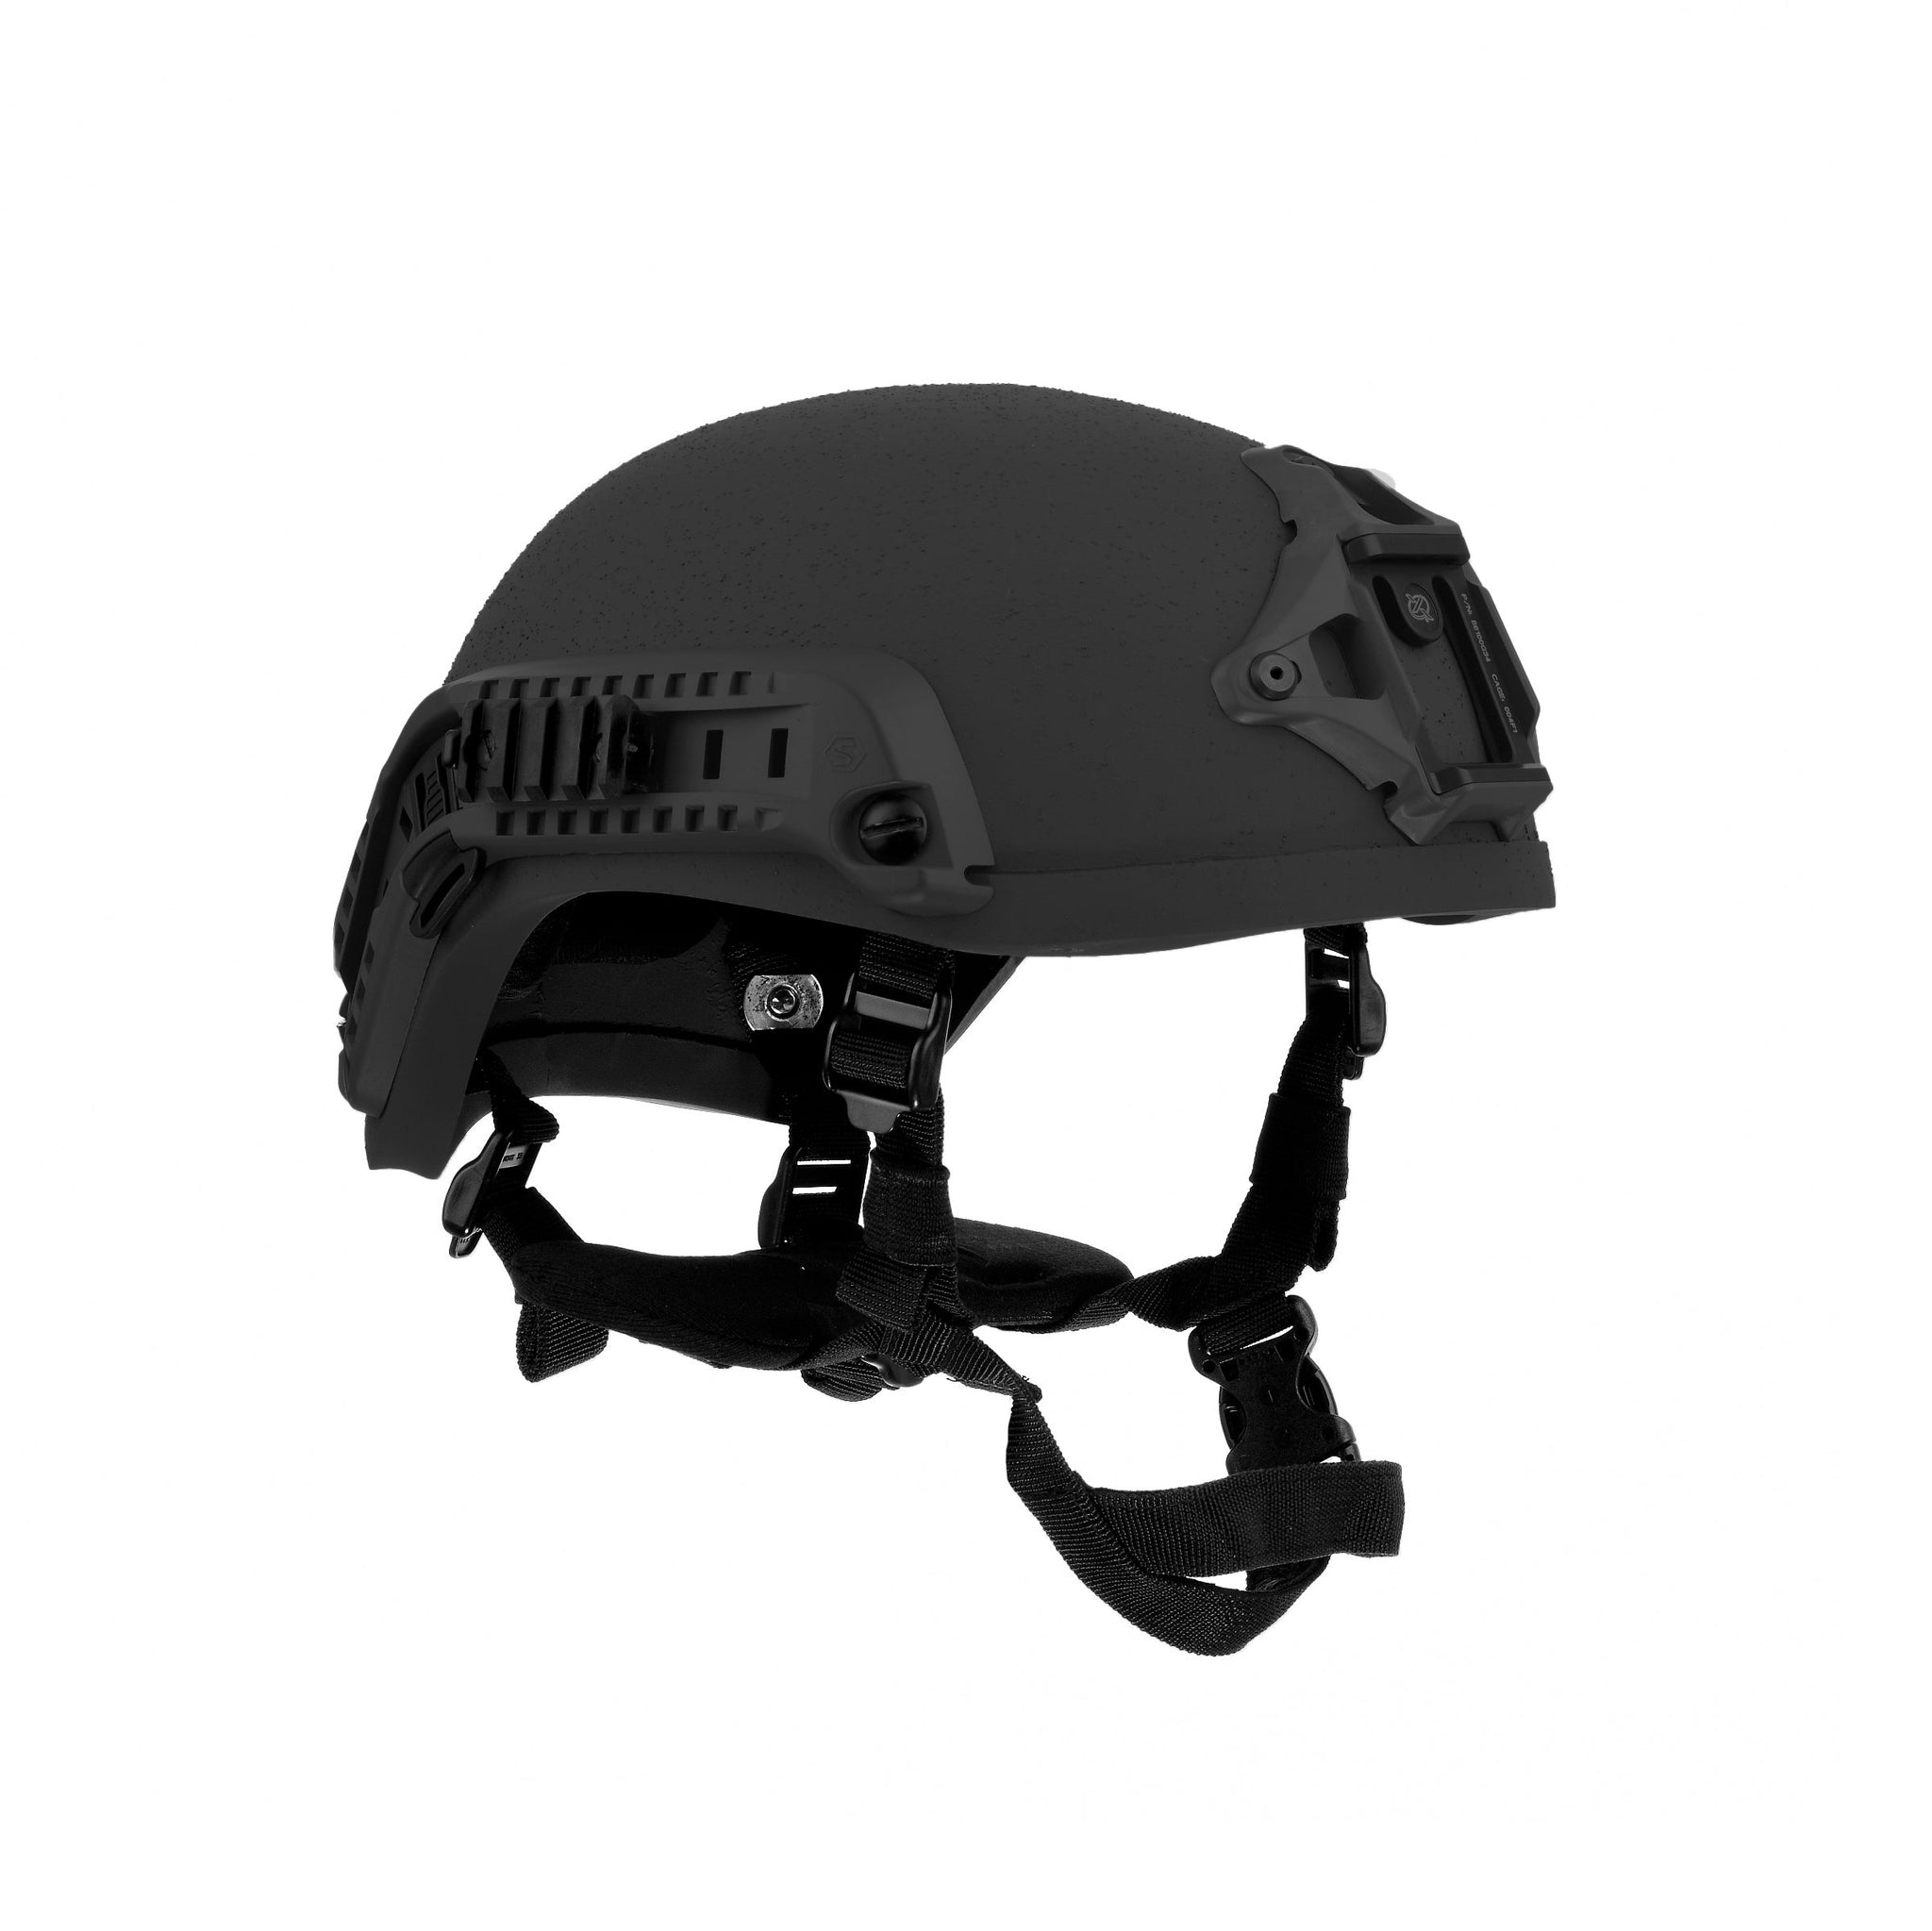 GunNook LLC – Ballistic Helmets, Plates and Tactical Gear - Custom PVC  Patches